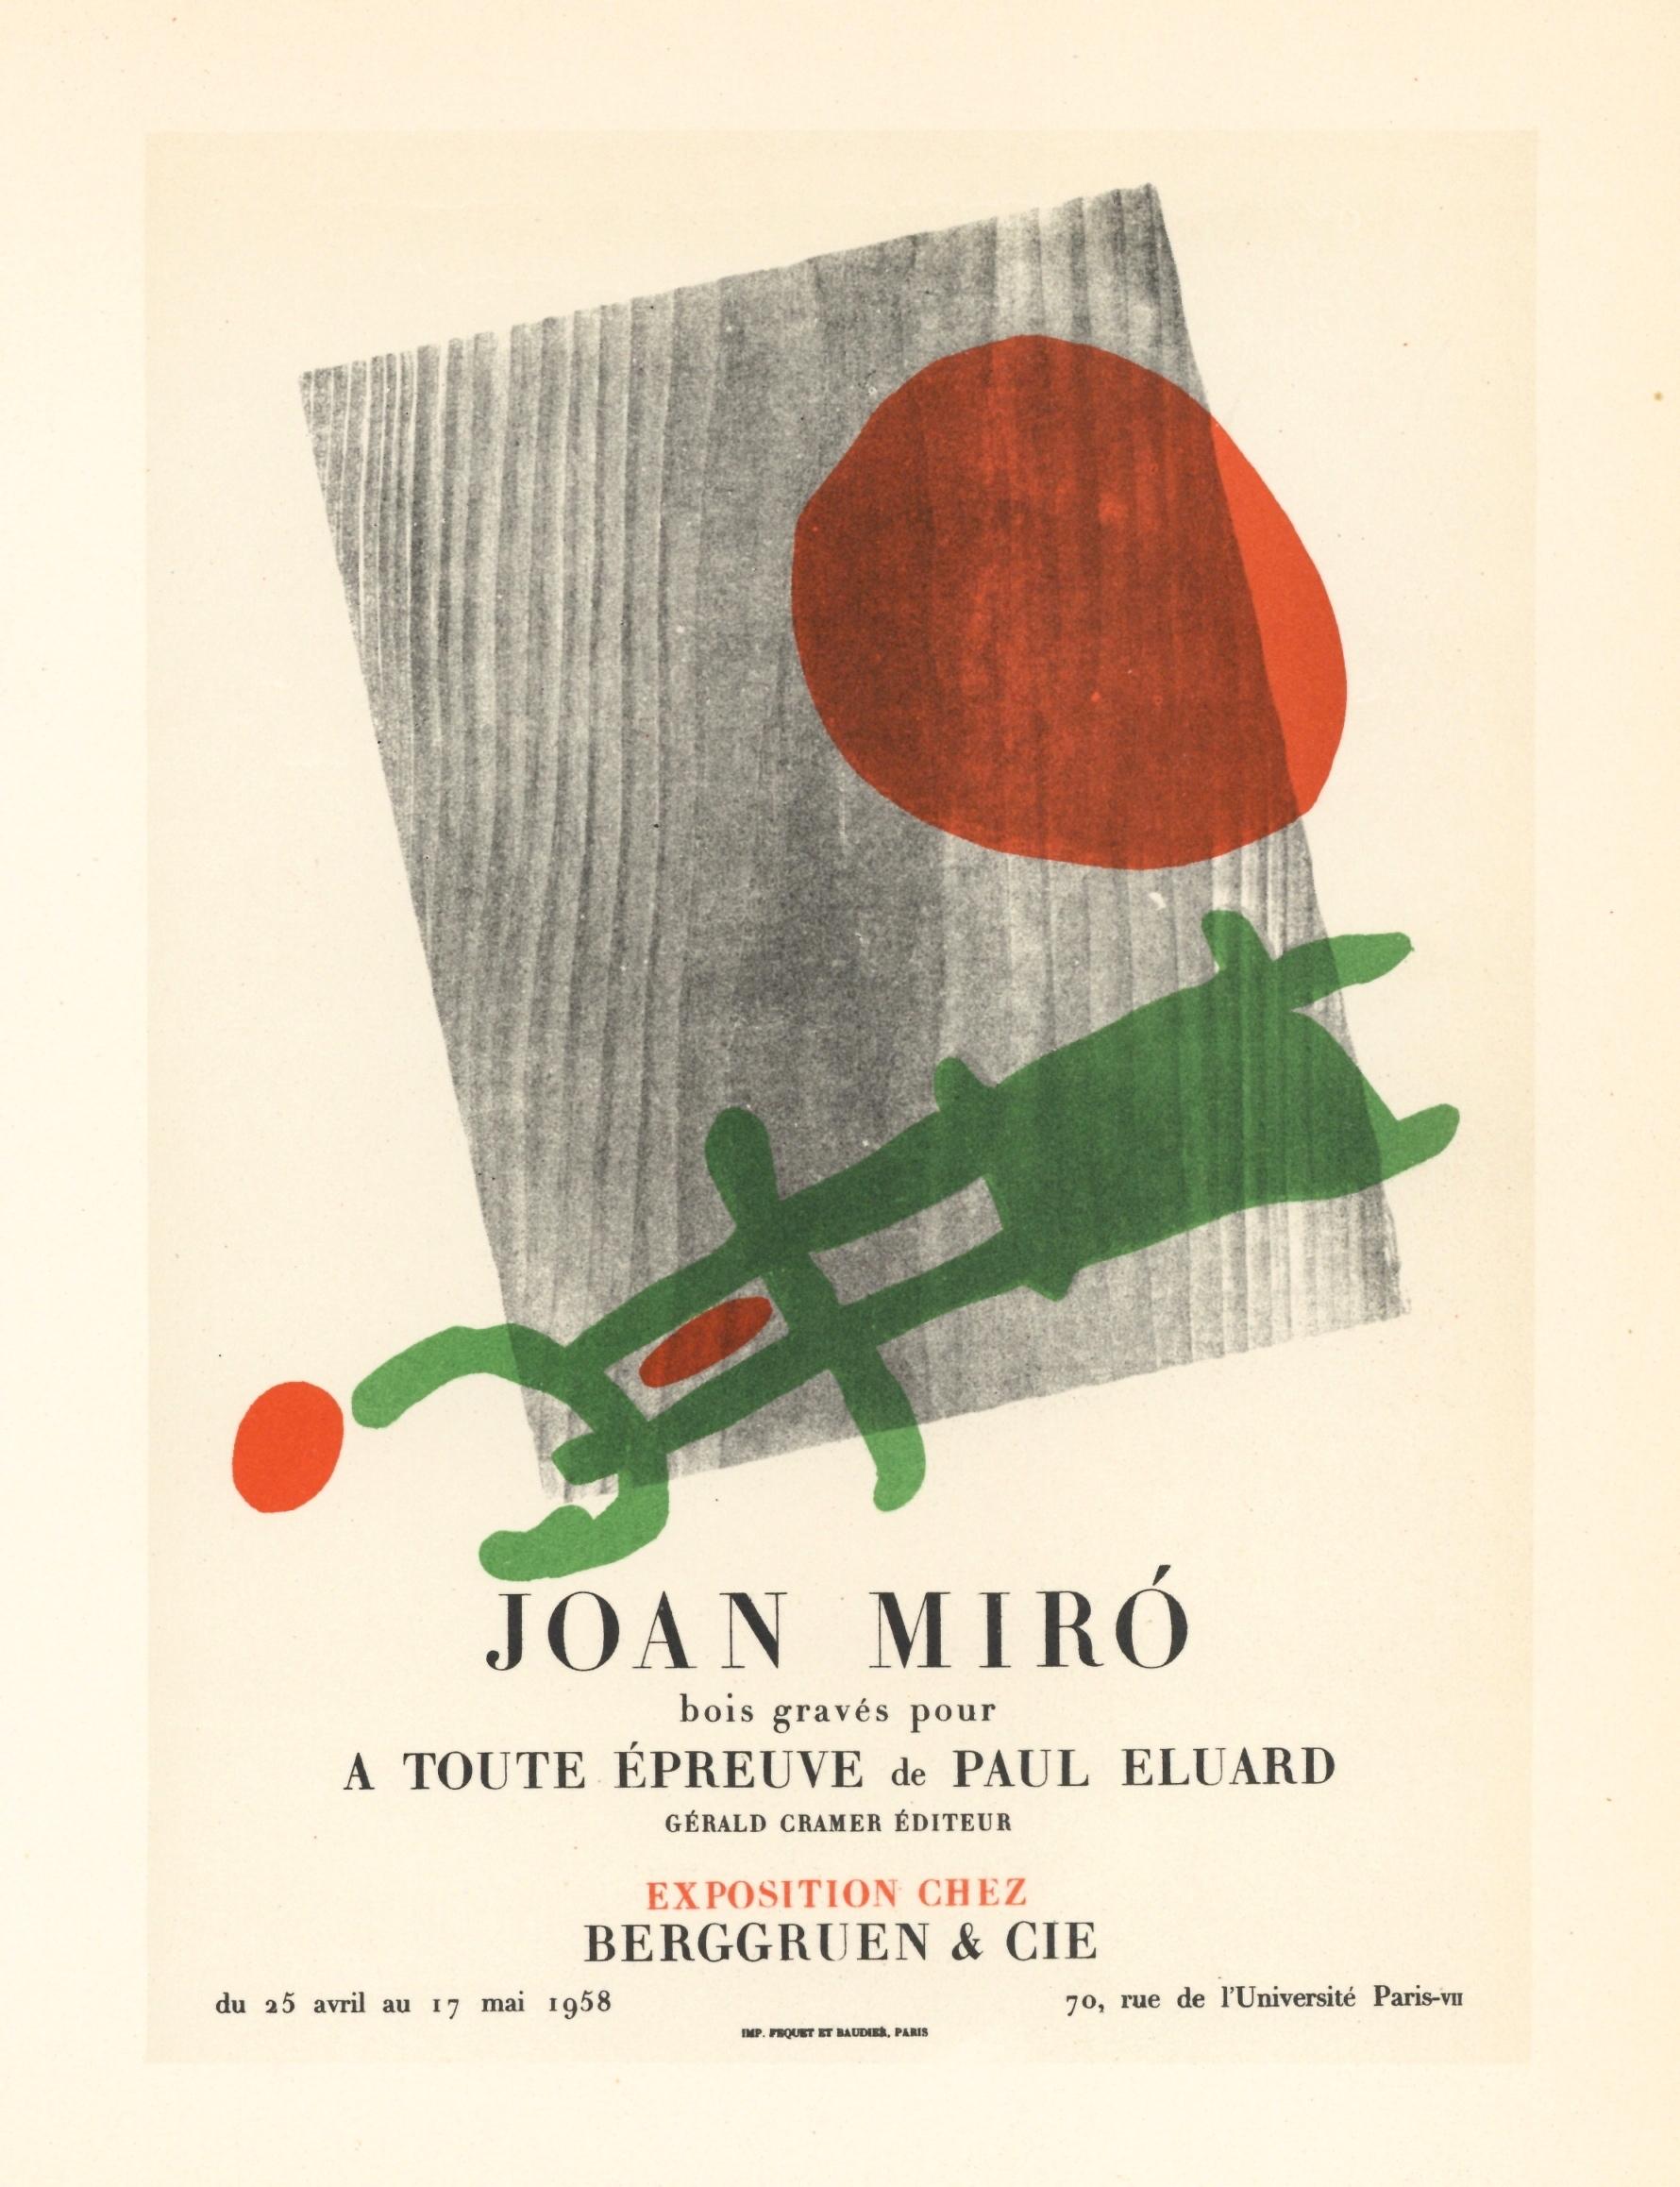 "A Toute Epreuve" lithograph poster - Print by (after) Joan Miró